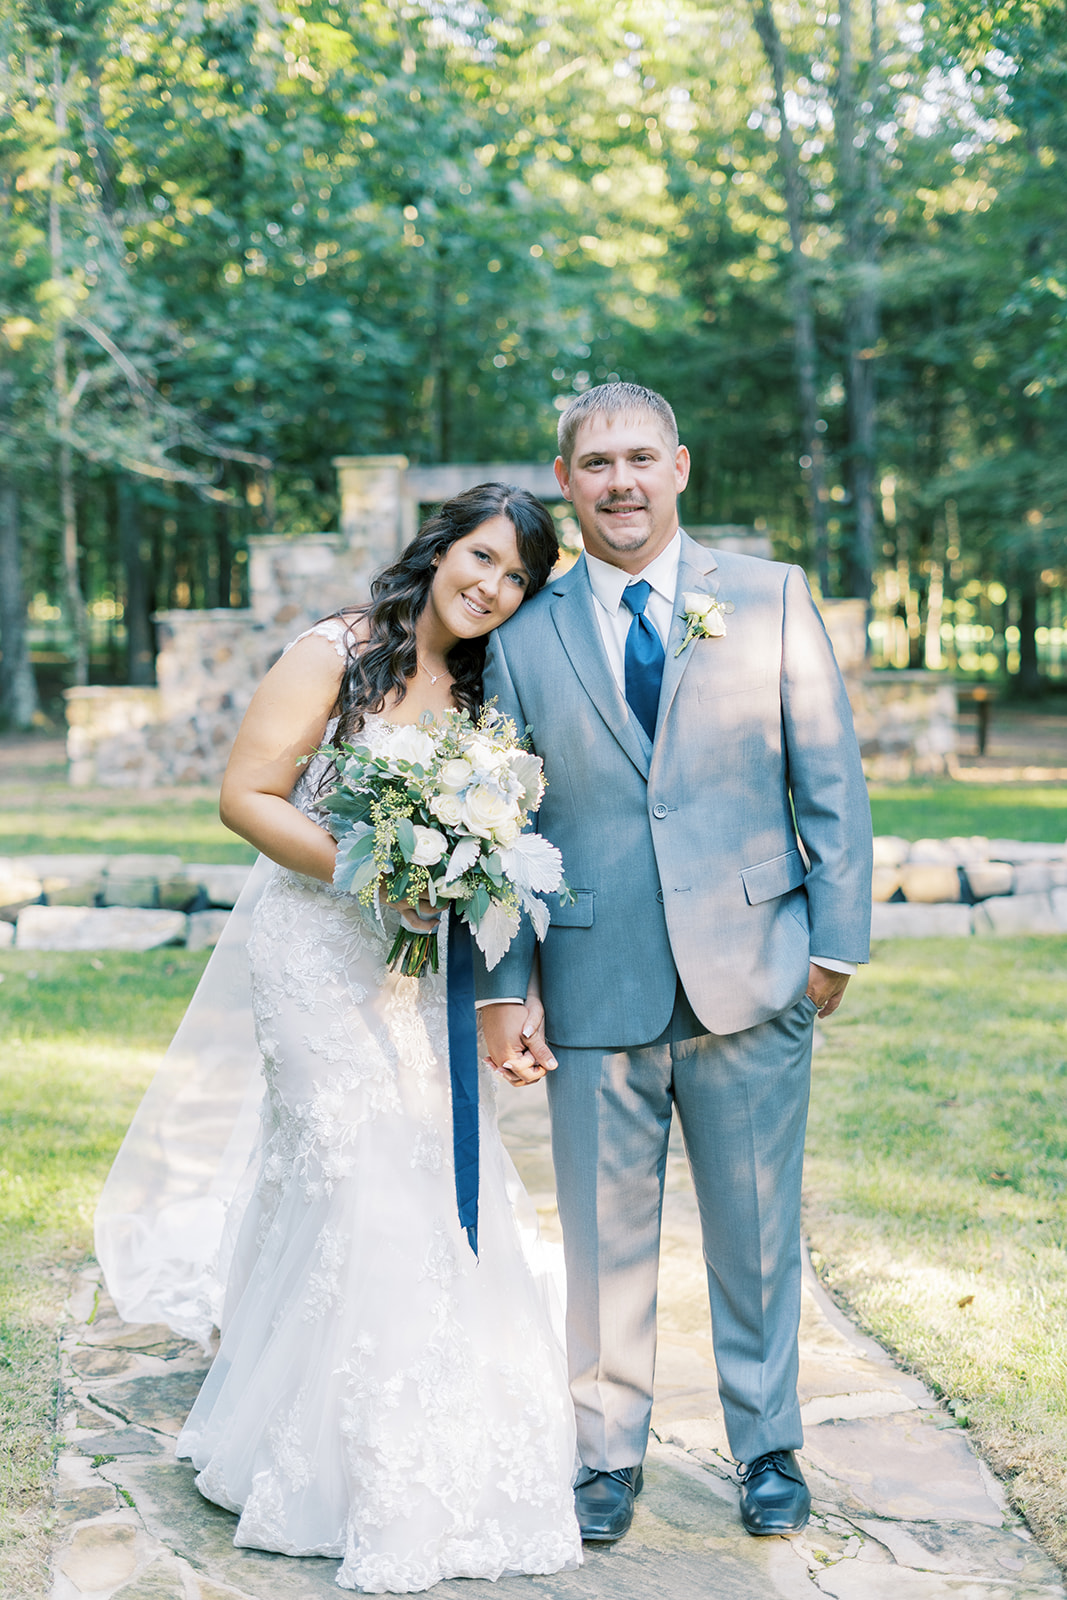 Chelsea Watkins Photography | Nashville Bride Guide